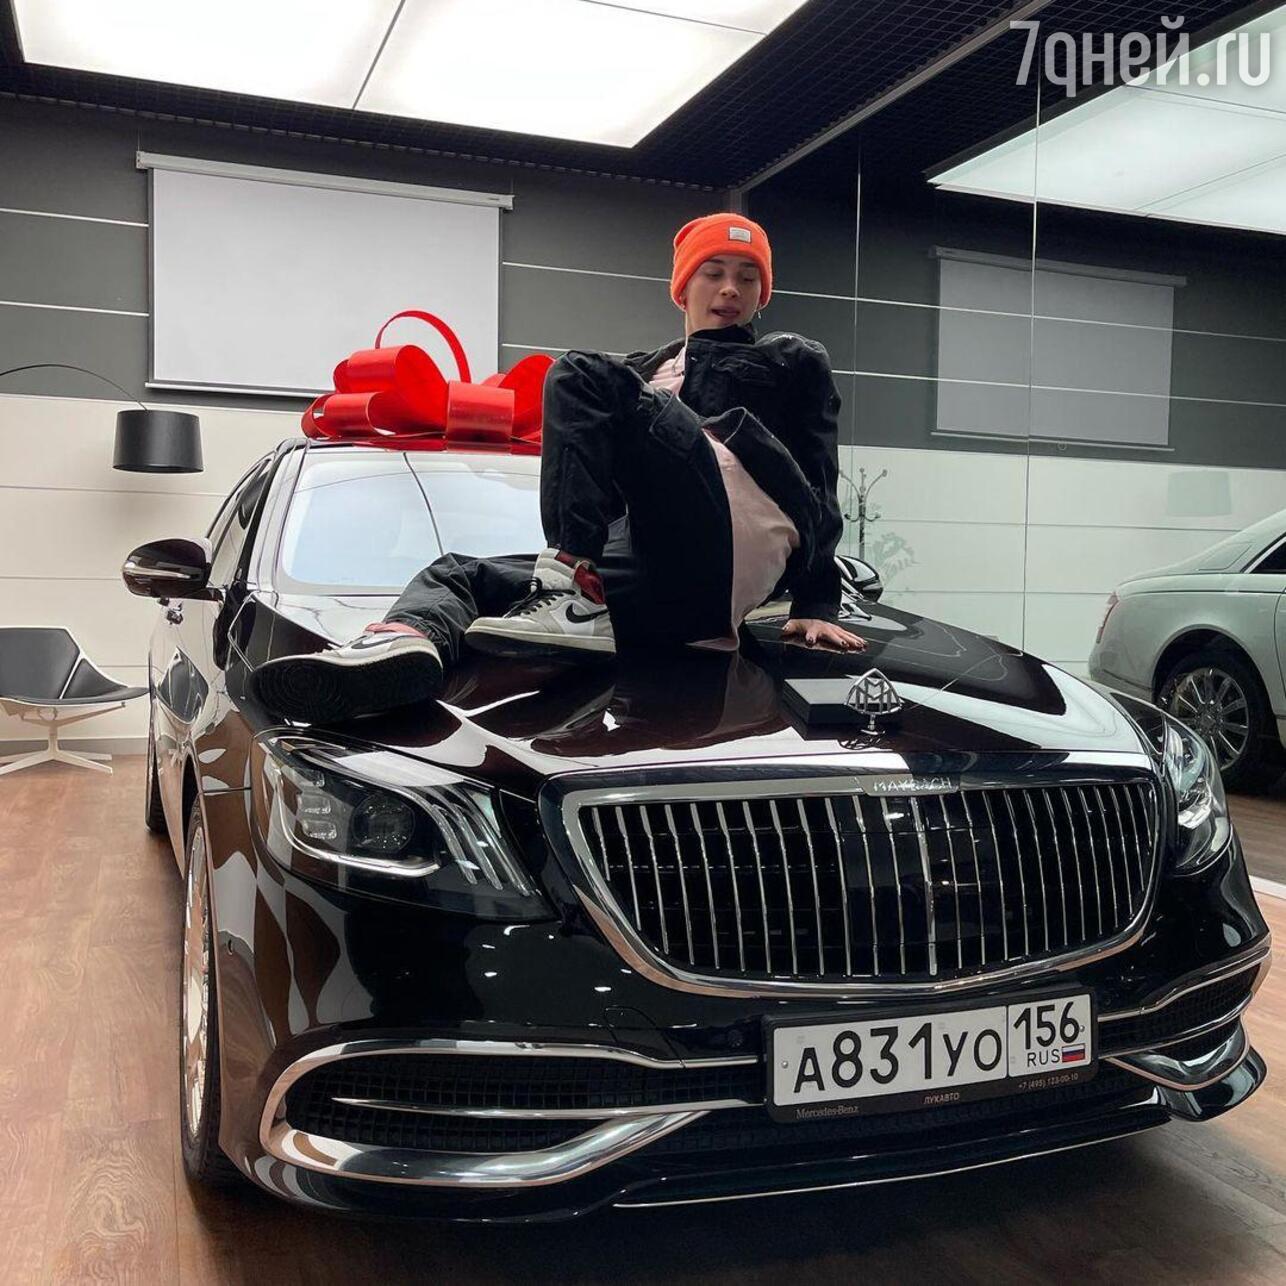 Продам за 1000000 рублей. Машина Дани Милохина 2021. Машина Дани Милохина Майбах.